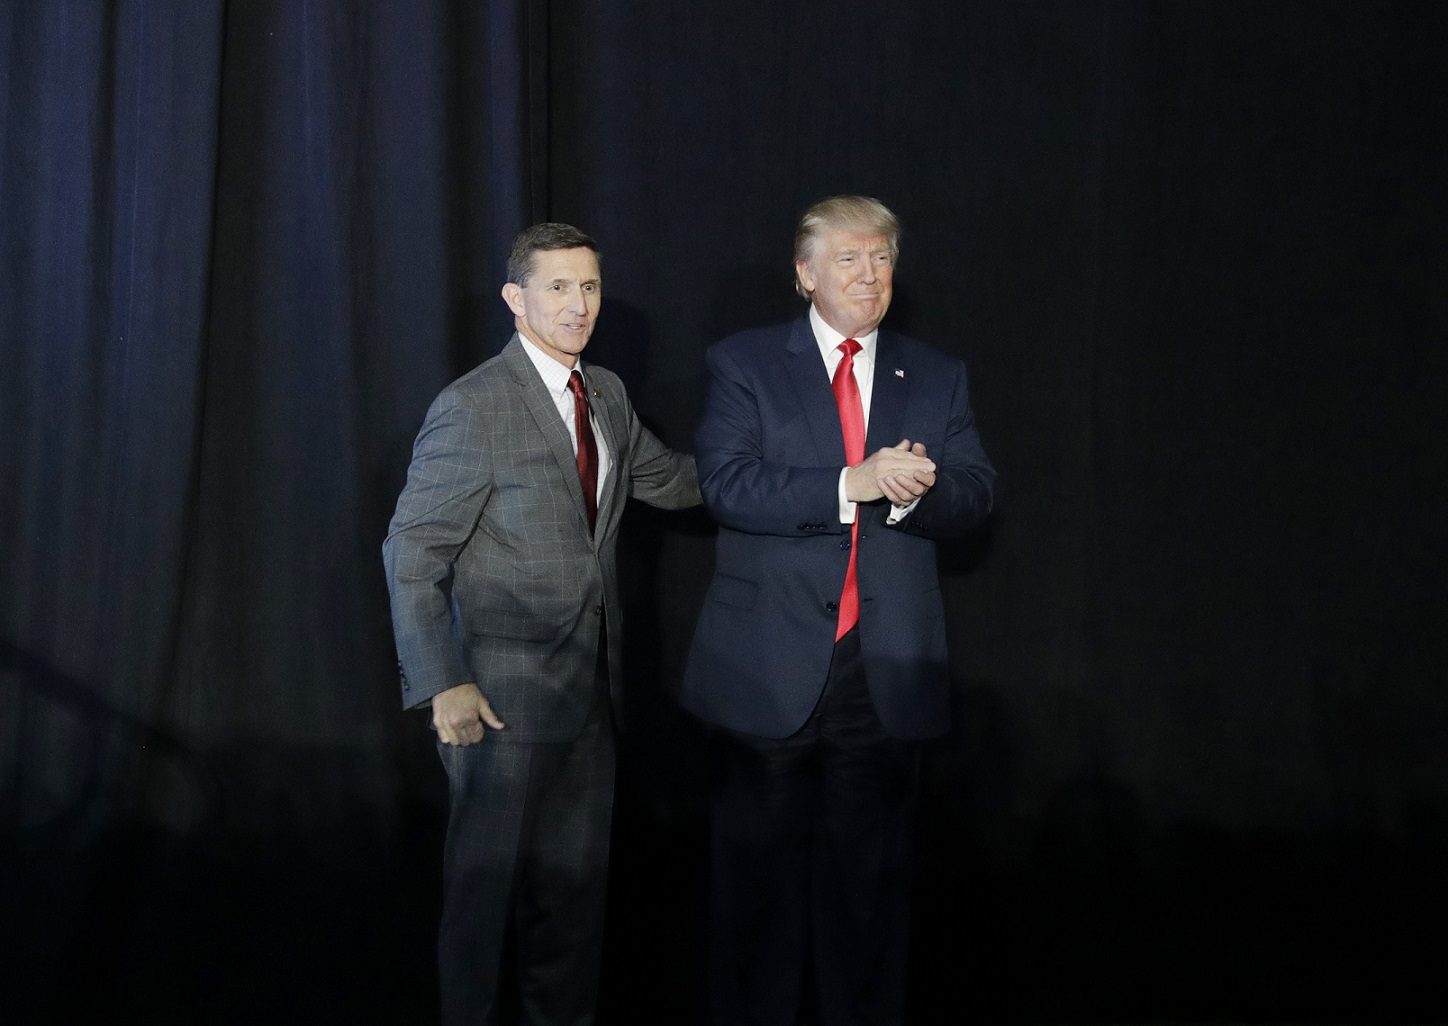 Flynn and Trump